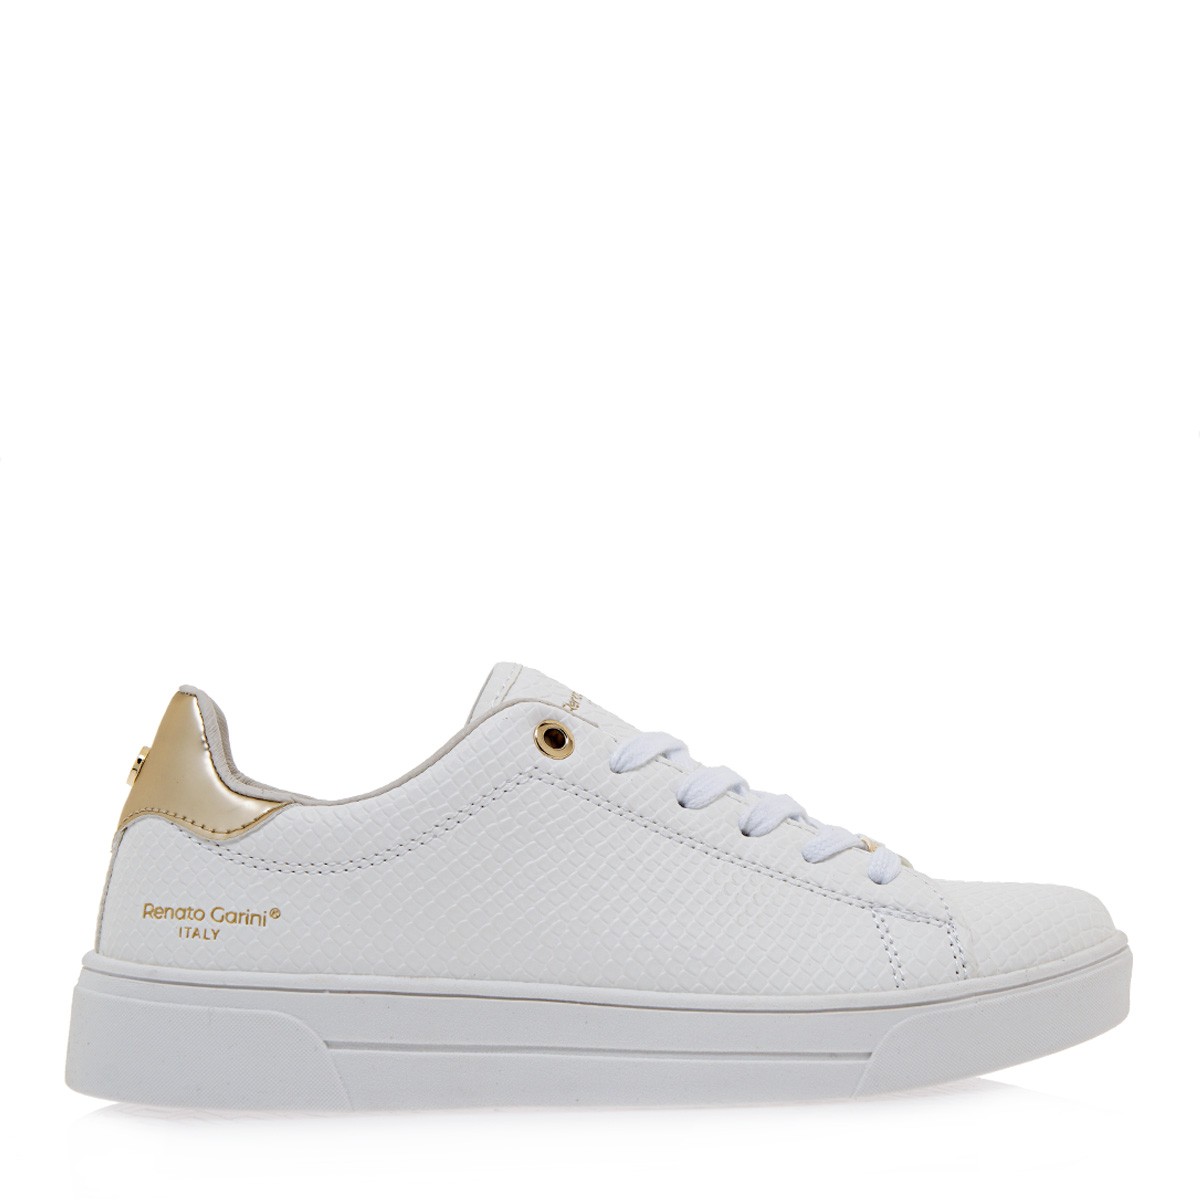 Renato Garini Γυναικεία Παπούτσια Sneakers 203-57Q Λευκό Φίδι Χρυσό Q157Q203167V